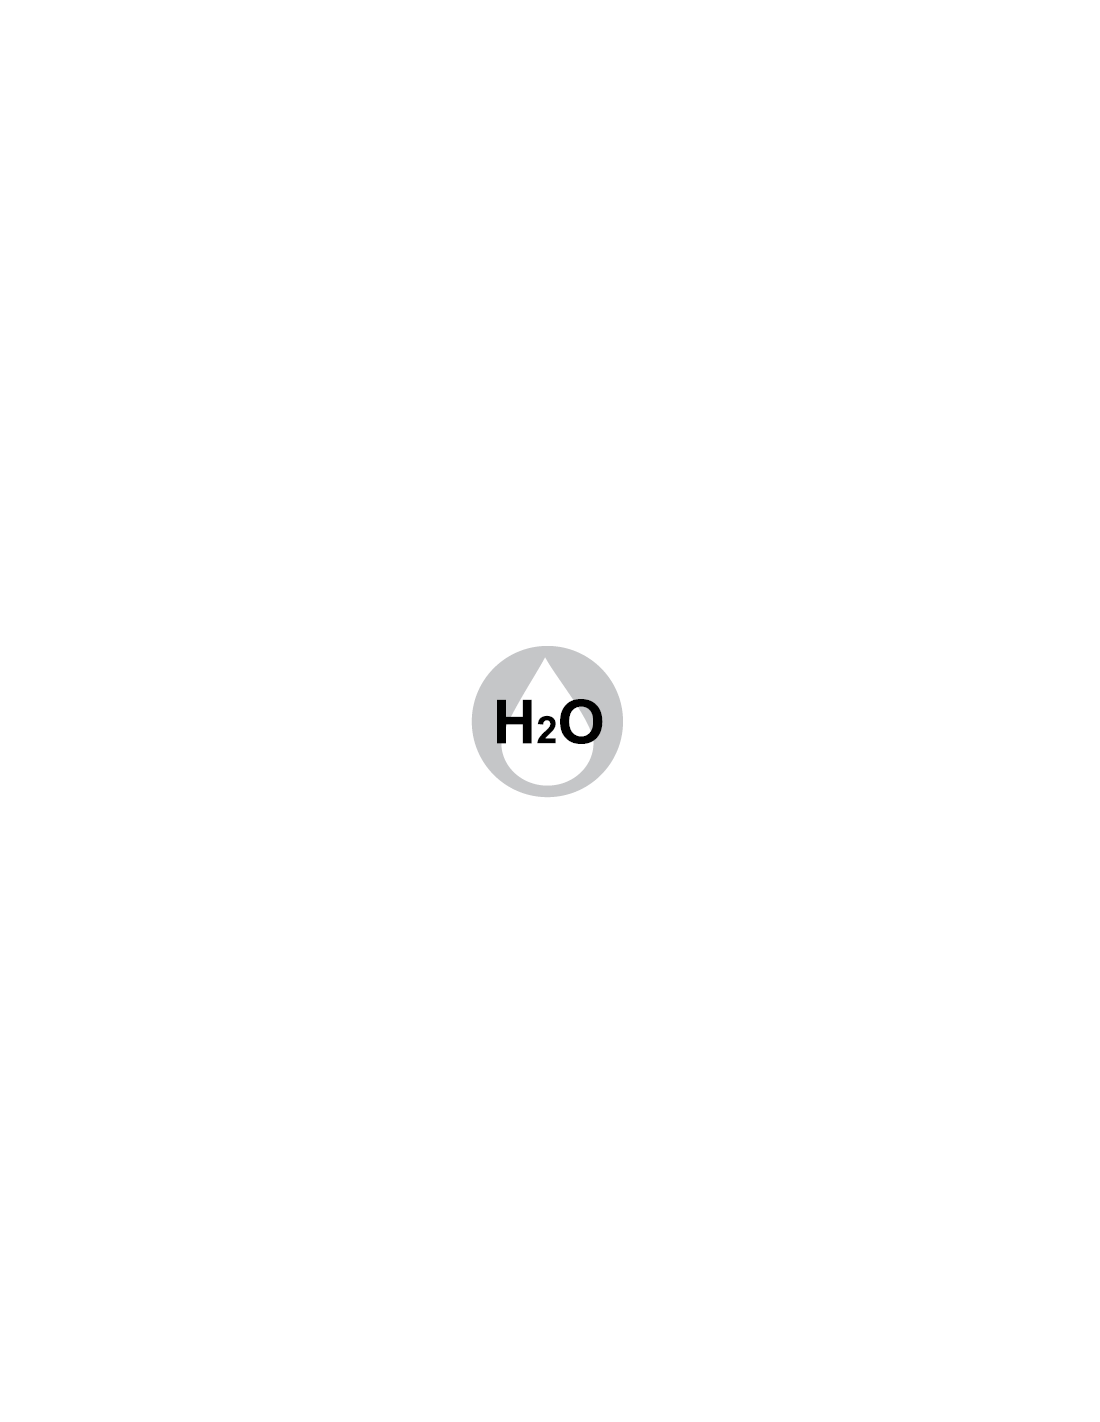 Condensation H2O - Model Snelle- Diva